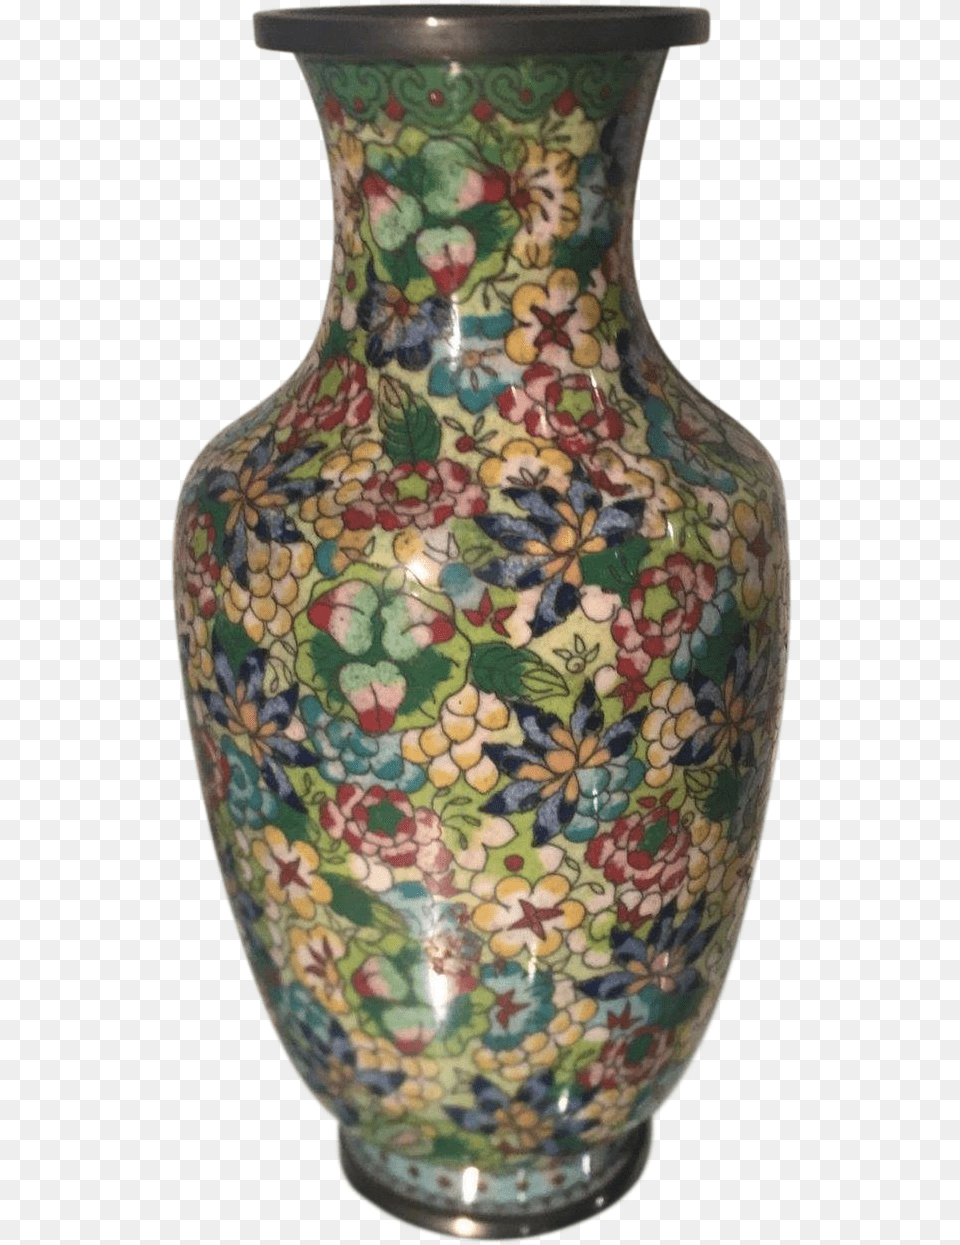 Unusual Antique Chinese Cloisonn Flower Vase On Chairish Porcelain, Art, Jar, Pottery, Accessories Png Image